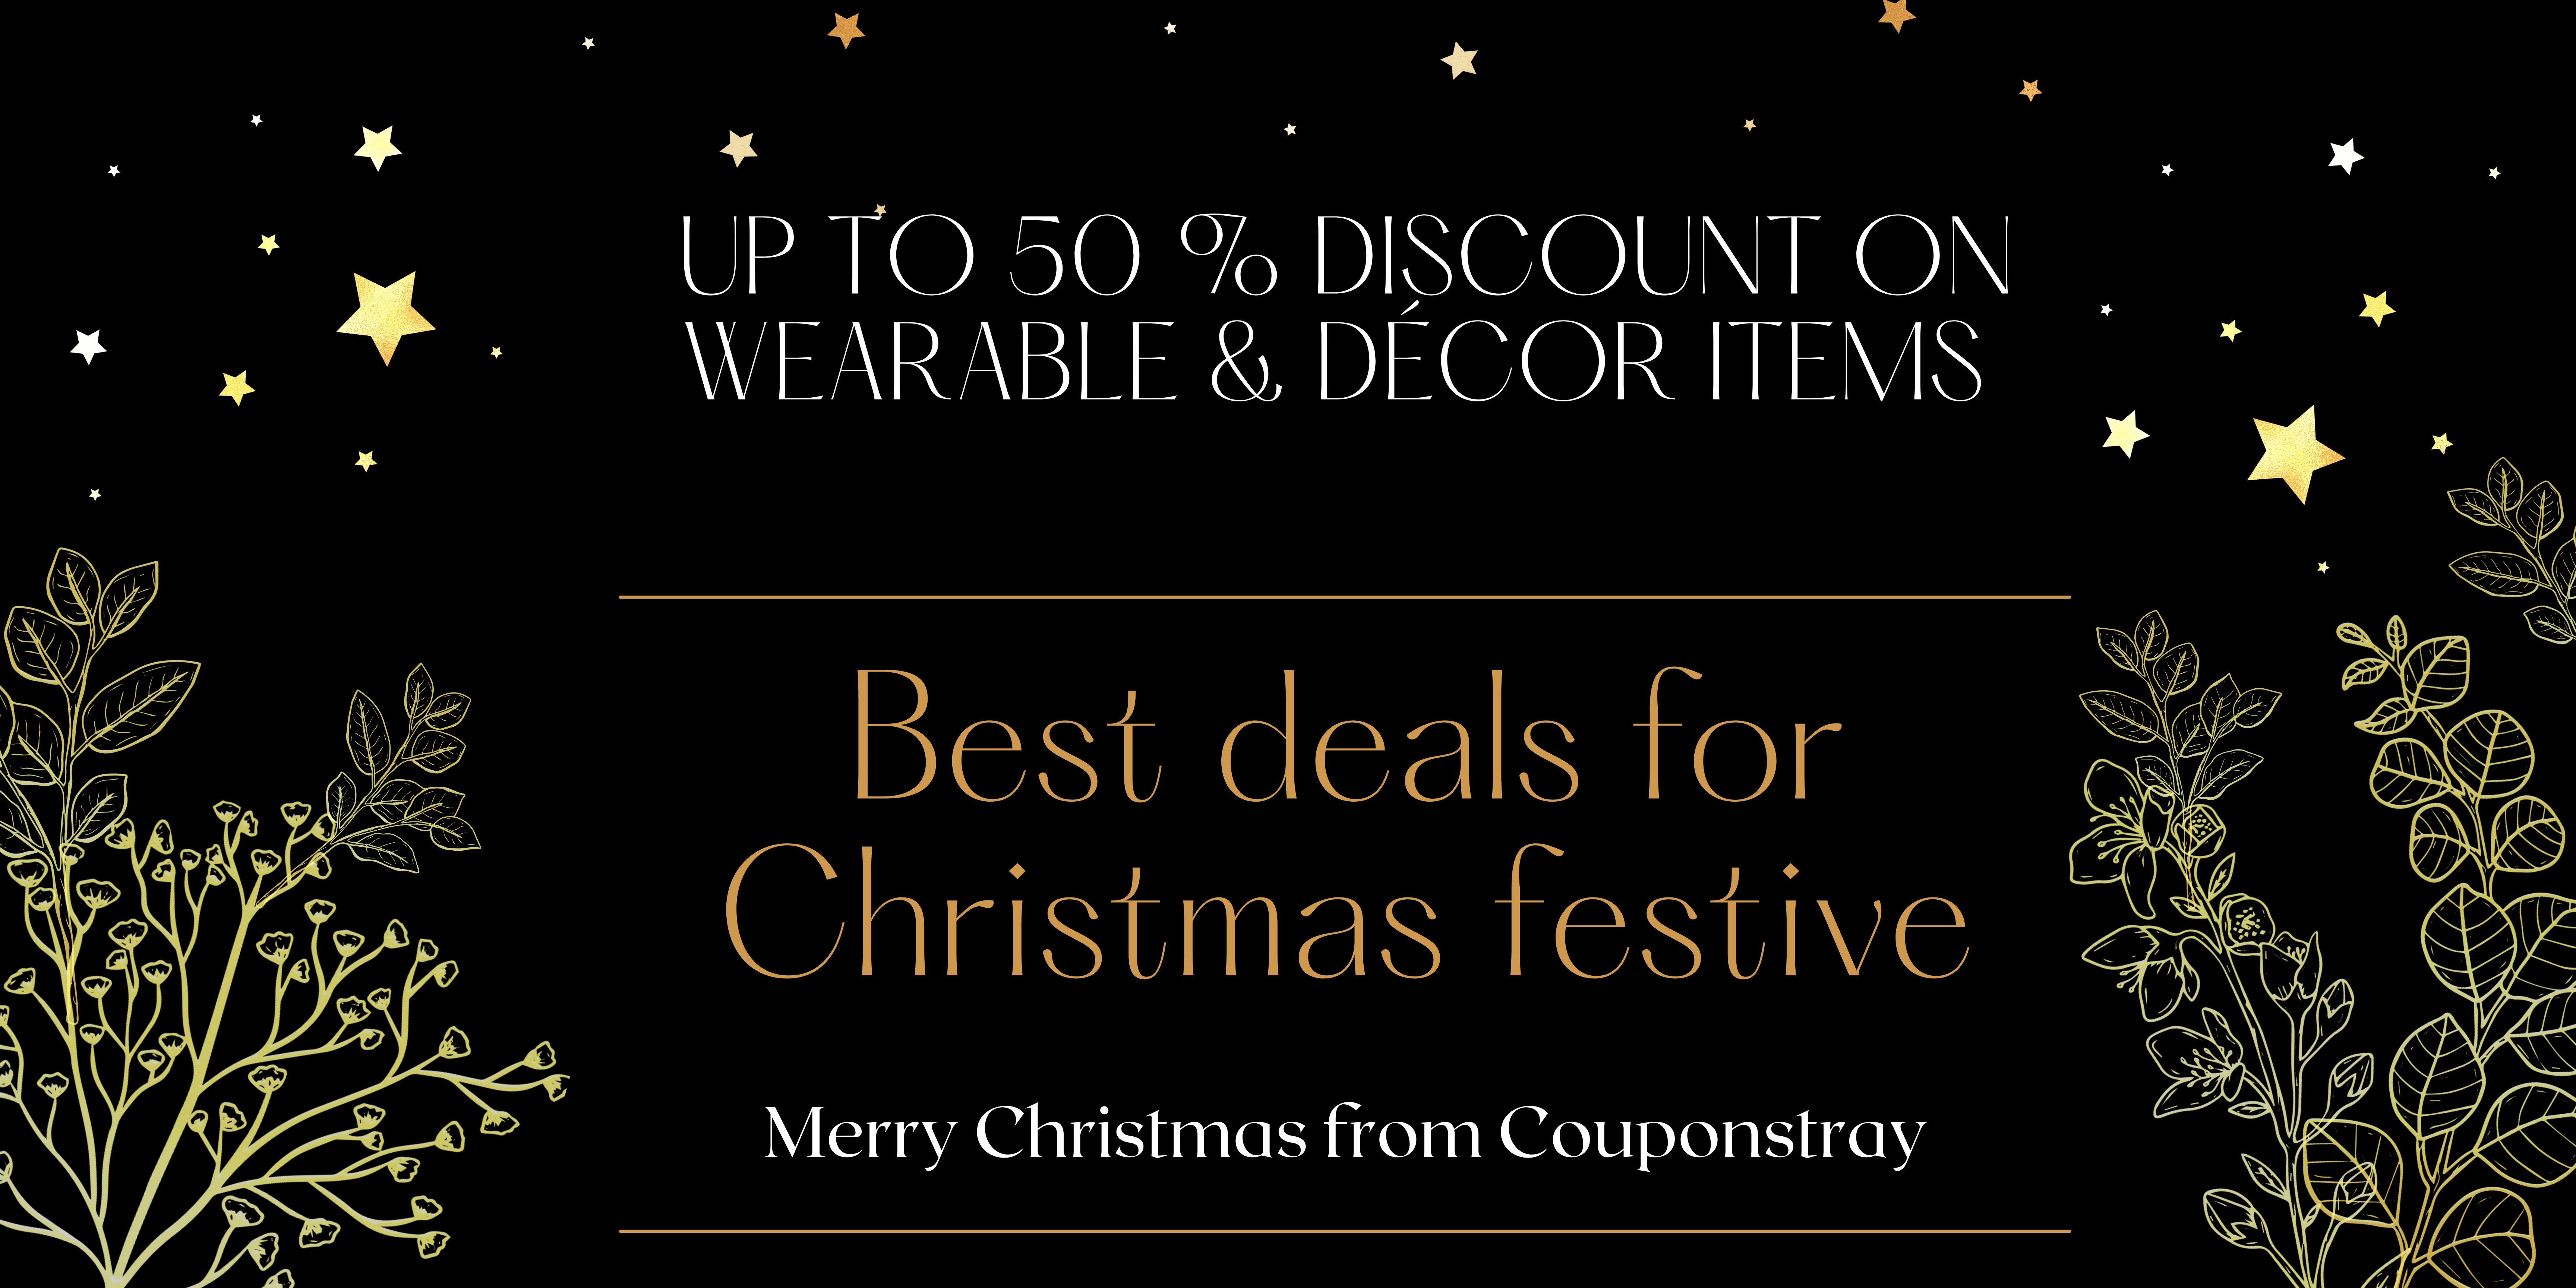 Best deals for Christmas festive